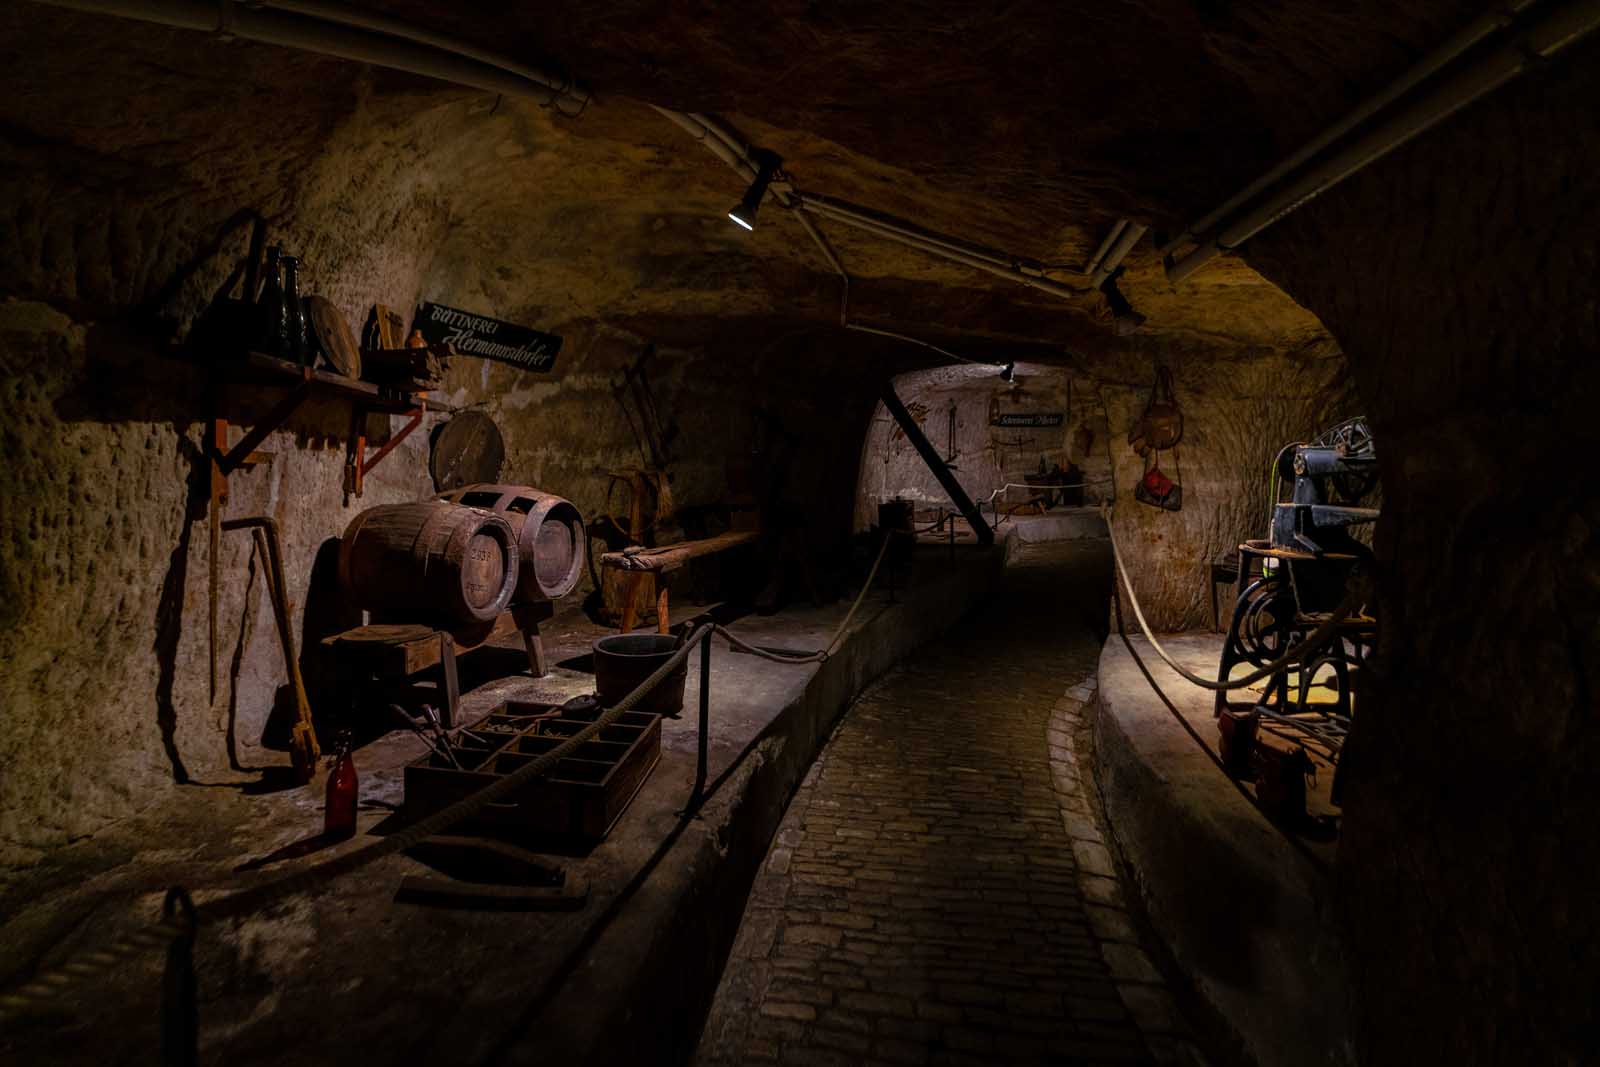 Bayreuth Catacombs underground the city